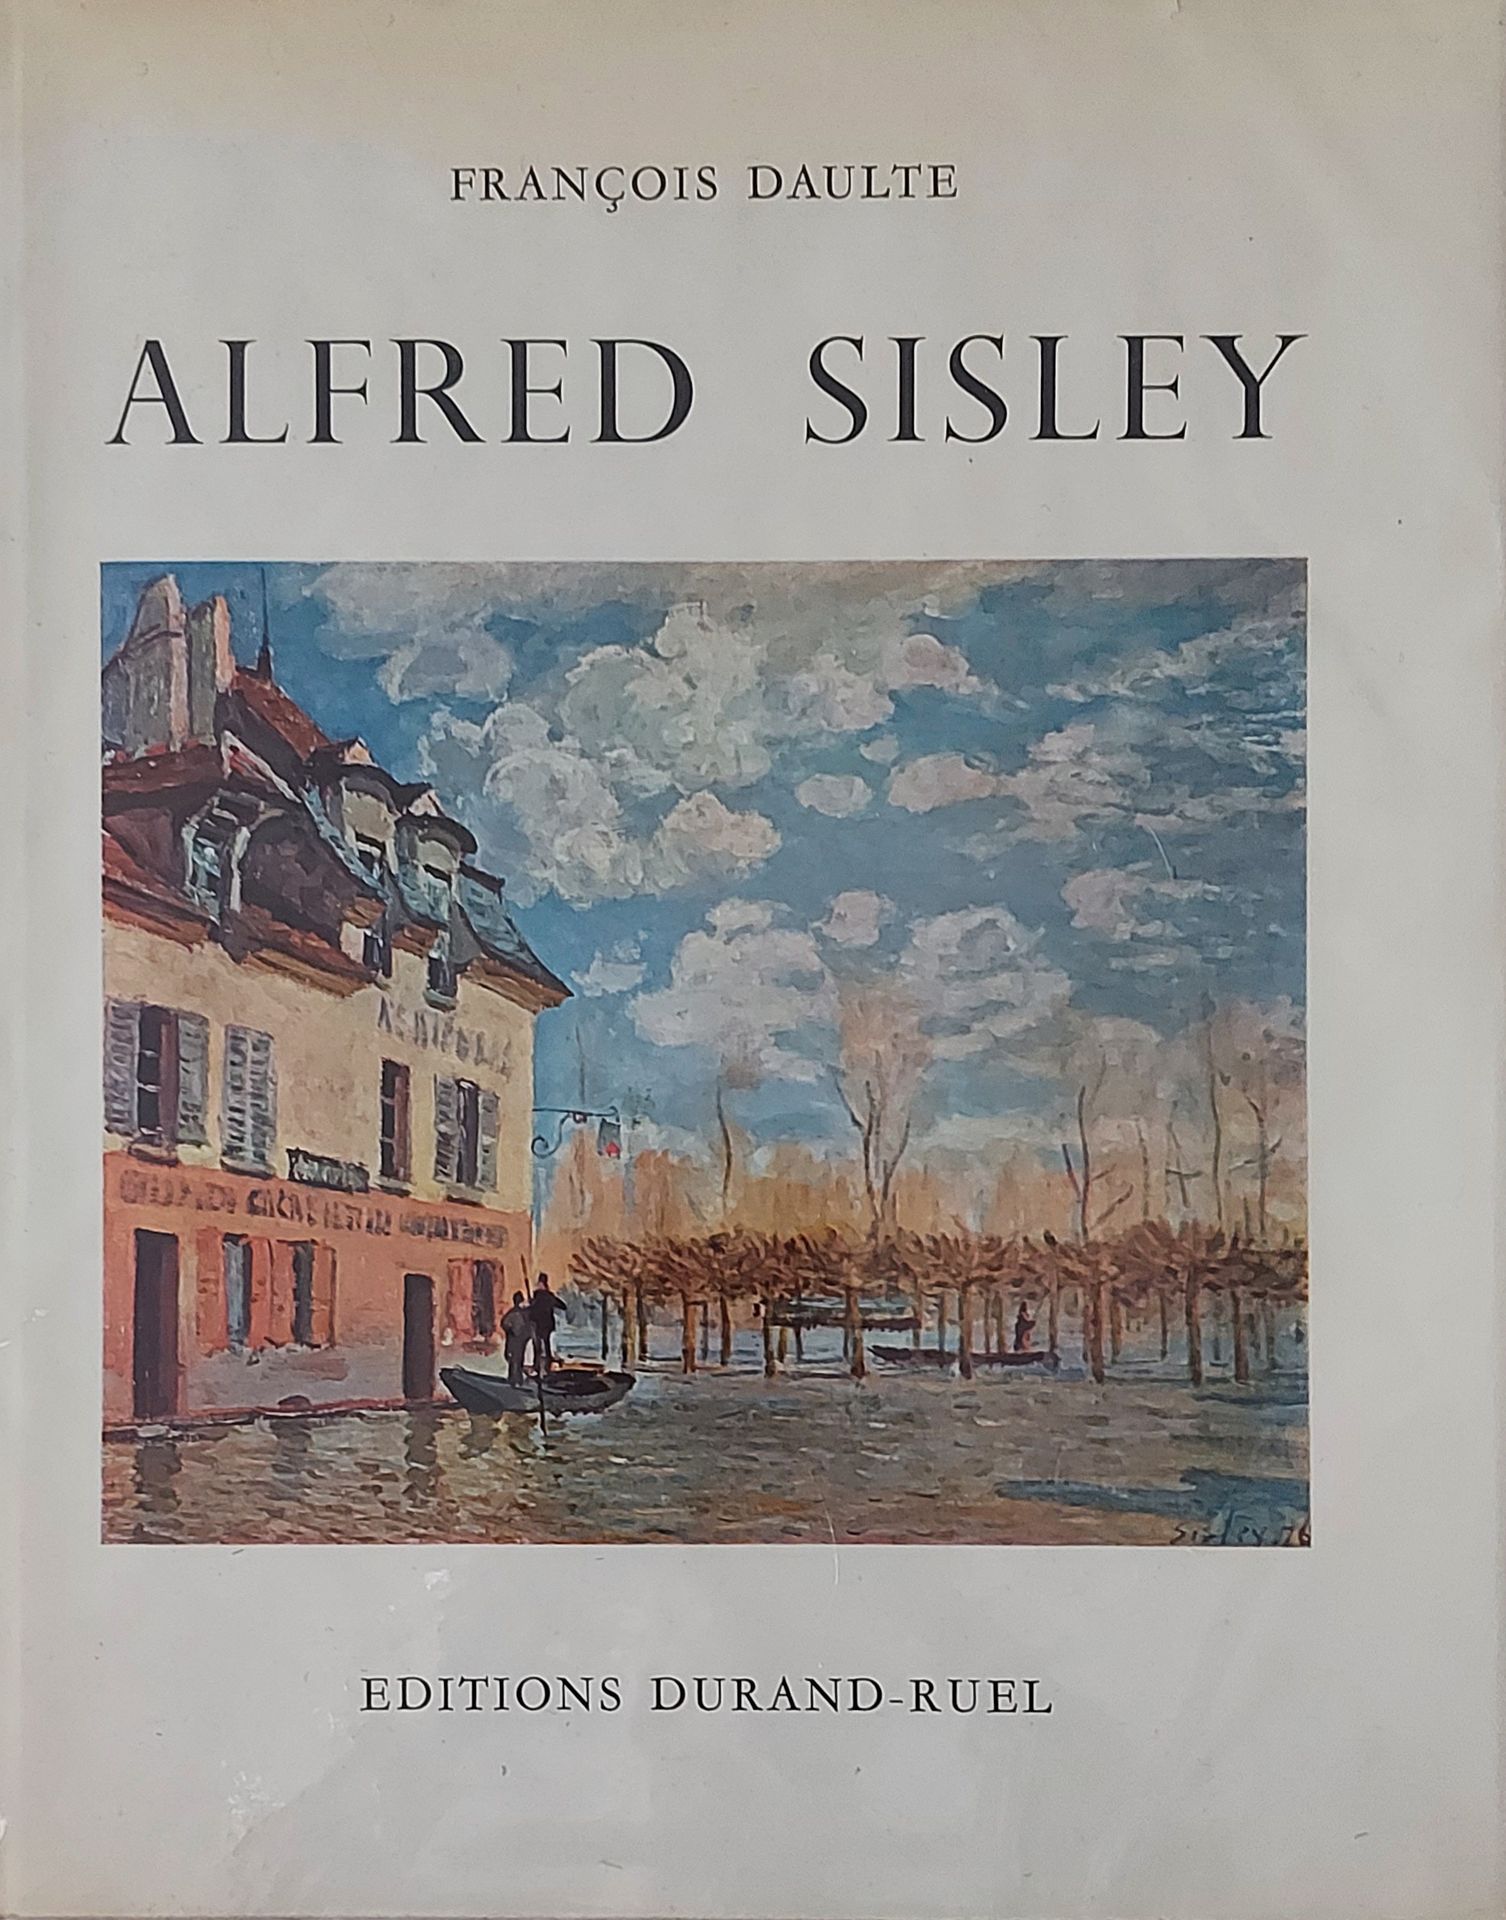 ALFRED SISLEY - François Daulte, Alfred Sisley. - 画作目录》，Durand-Ruel出版社，洛桑，1959年，&hellip;